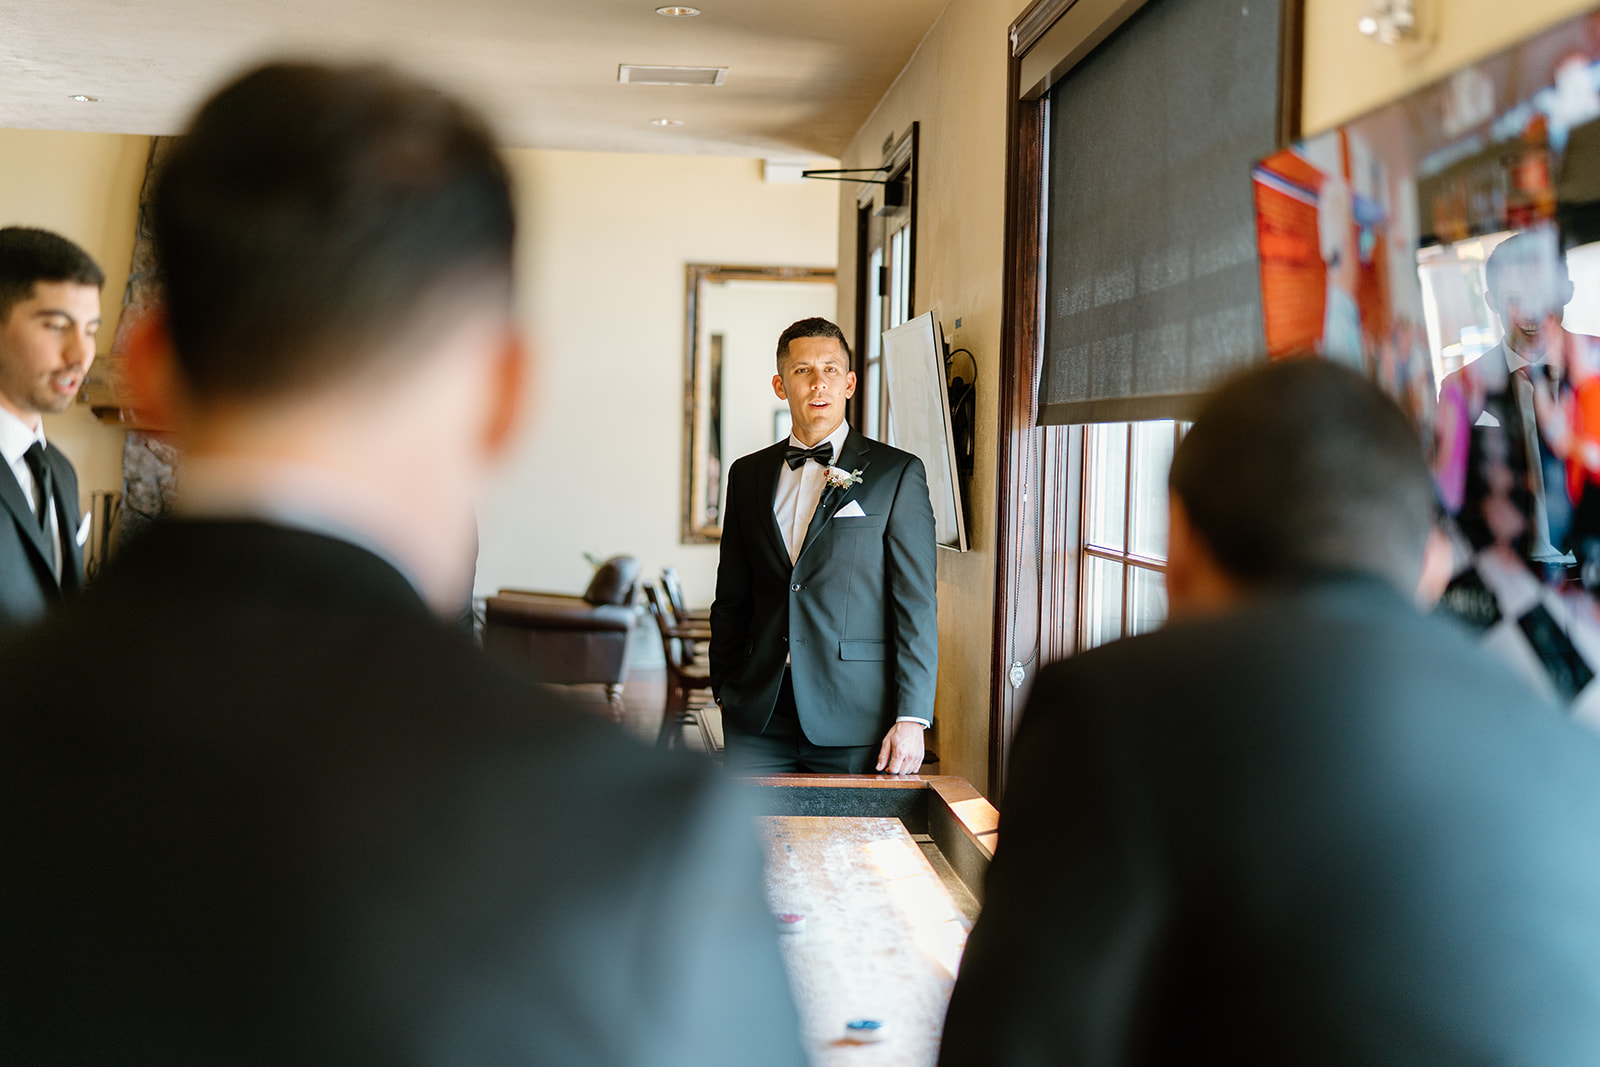 Sydney Jai Photography - Northern California wedding photographer, groom getting ready, groomsmen photos